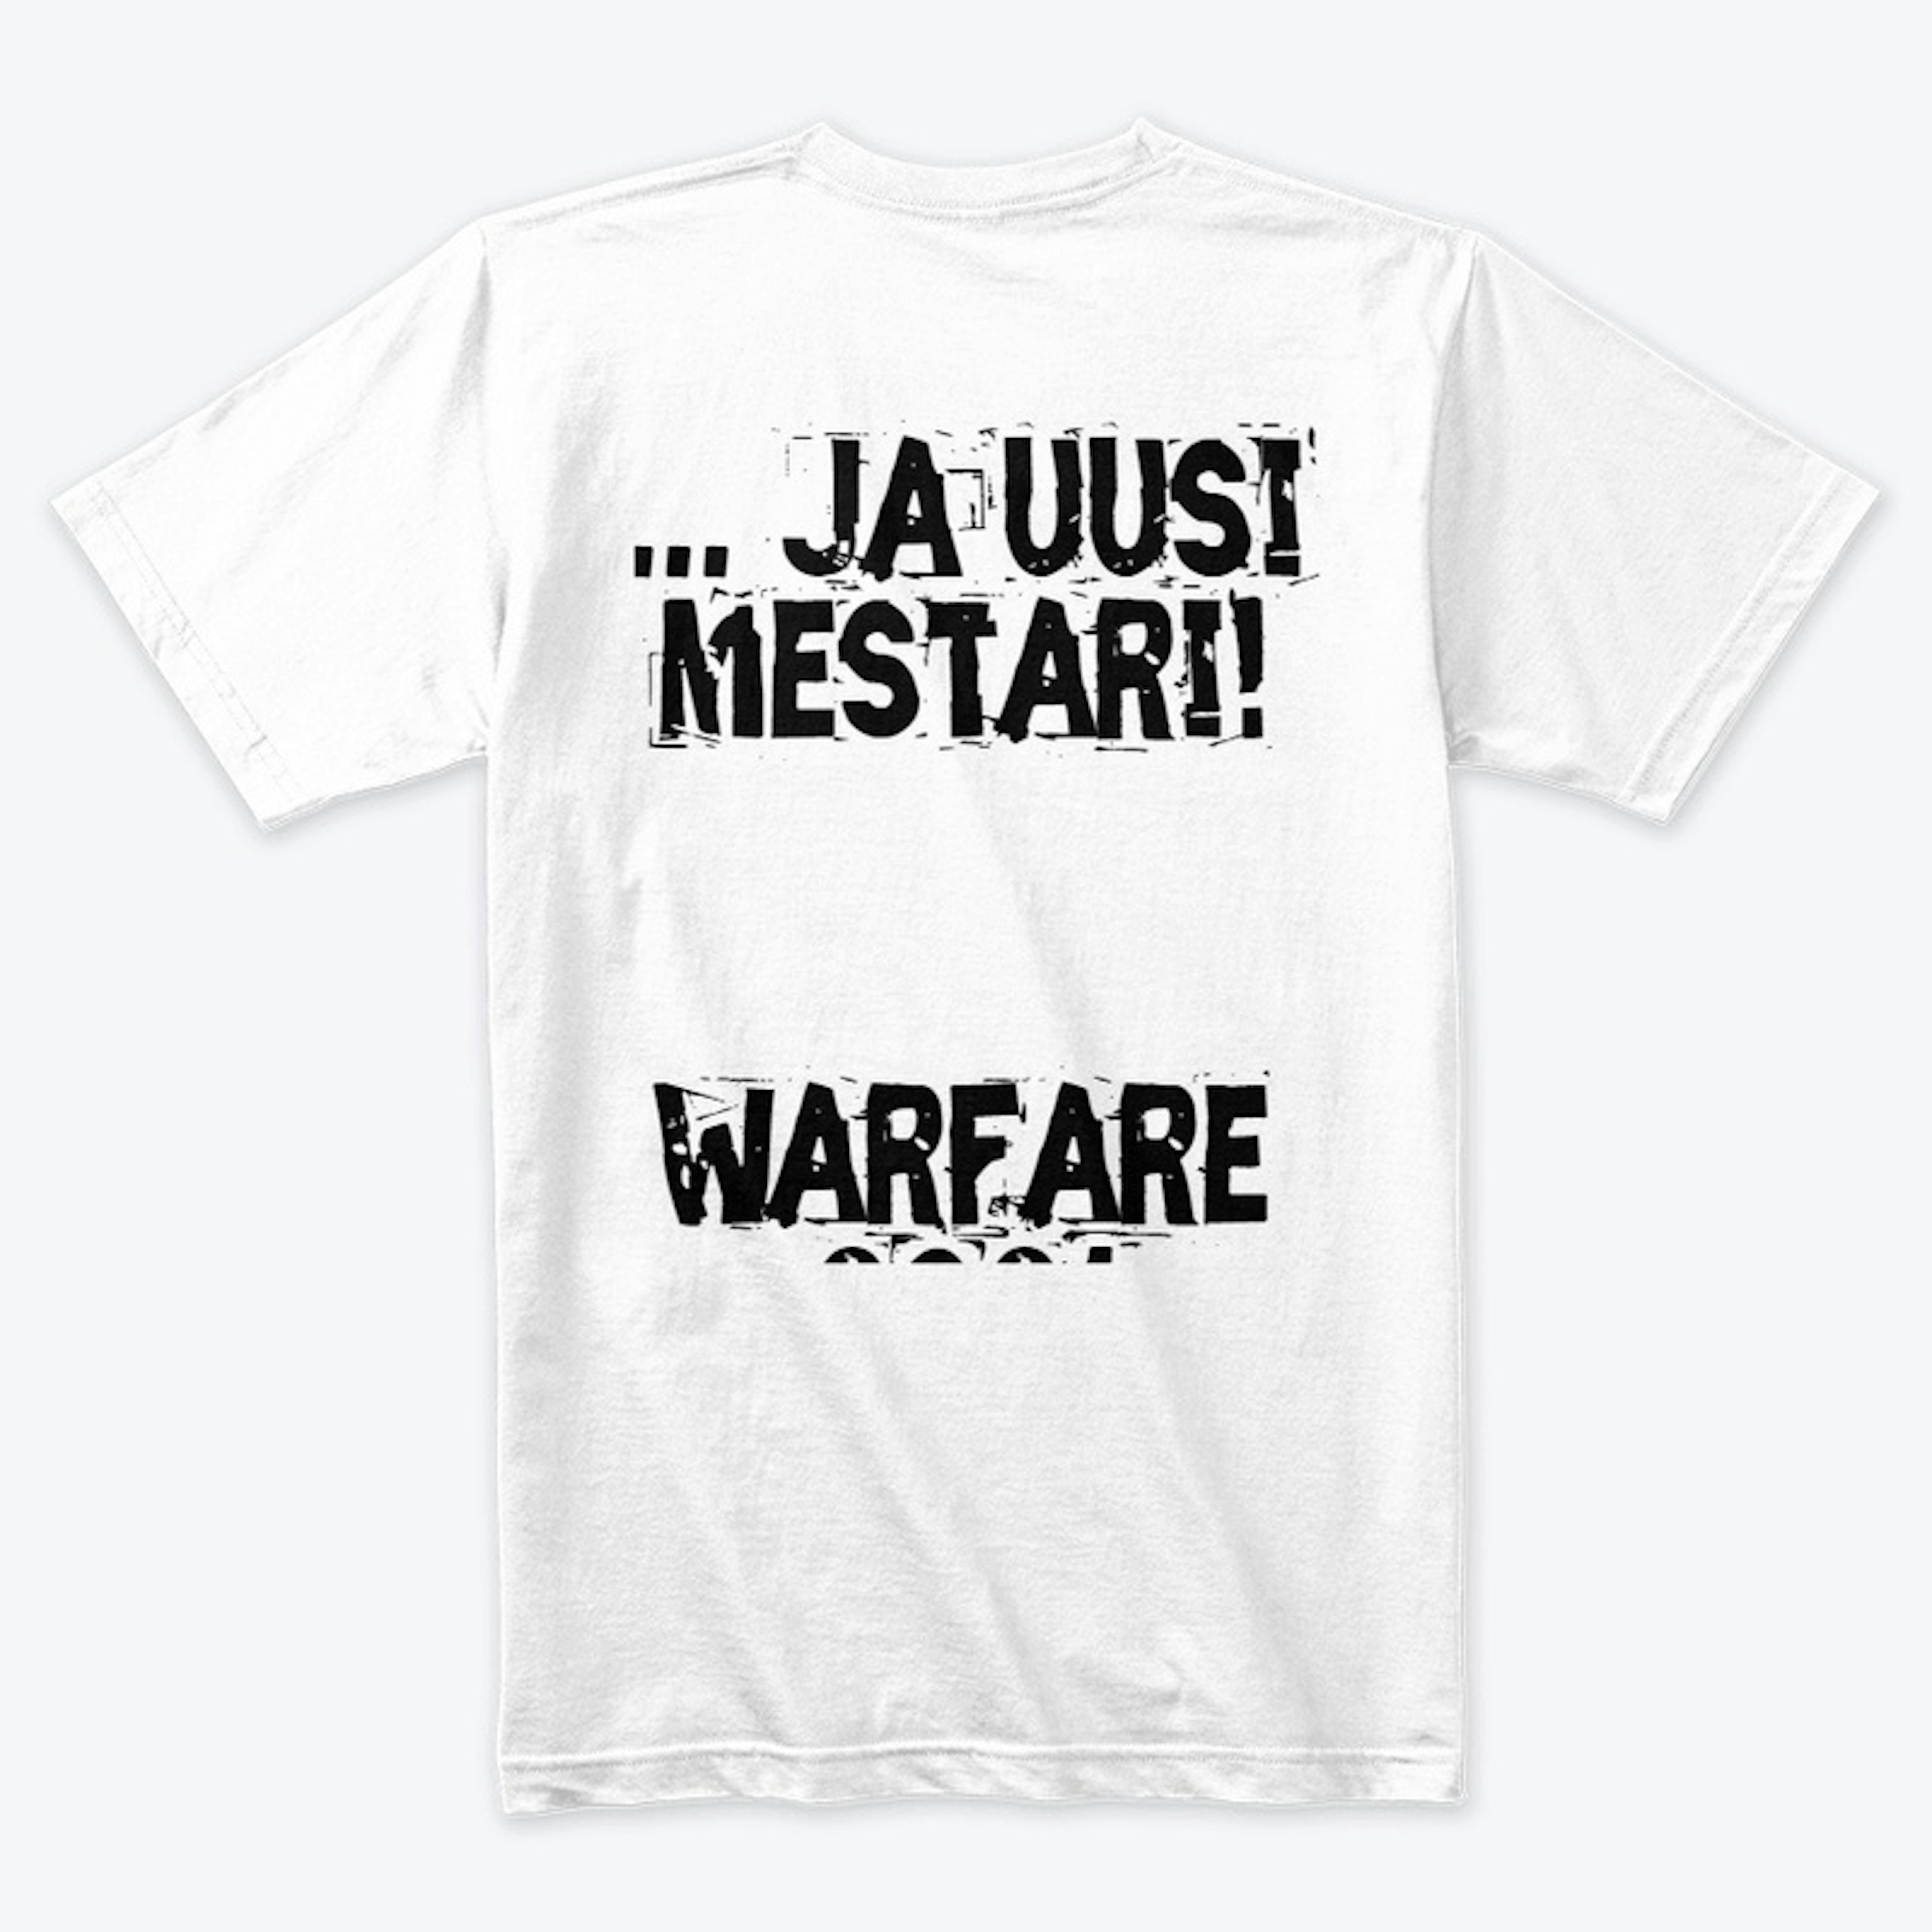 To the Finnish - Warfare 2021